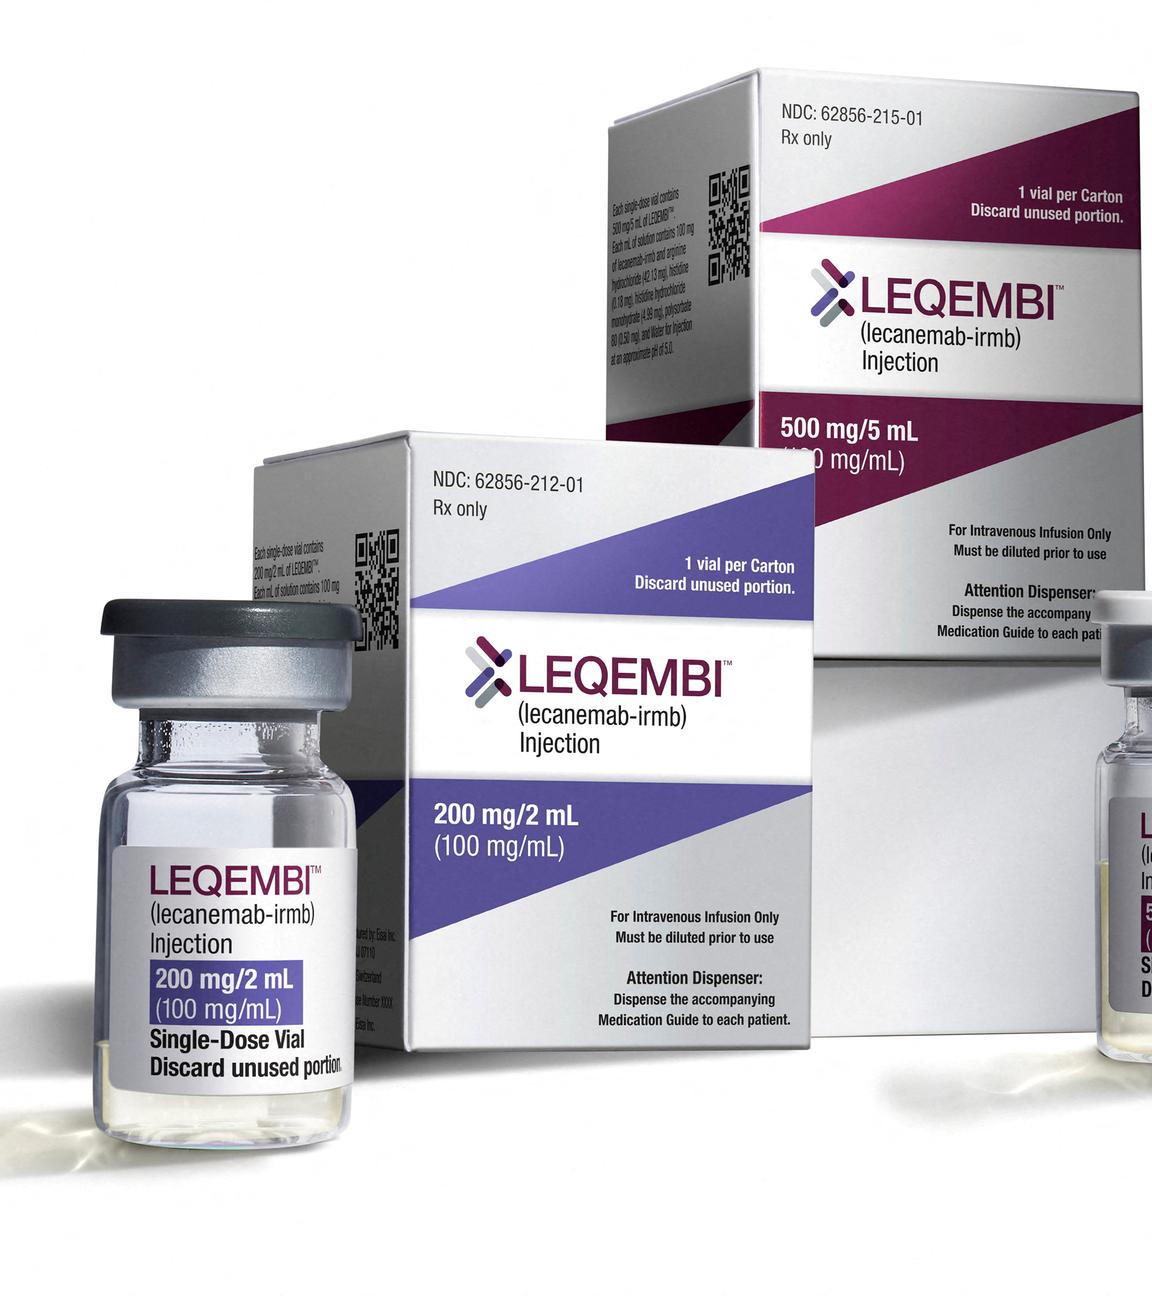 "Leqembi"- das Alzheimermedikament